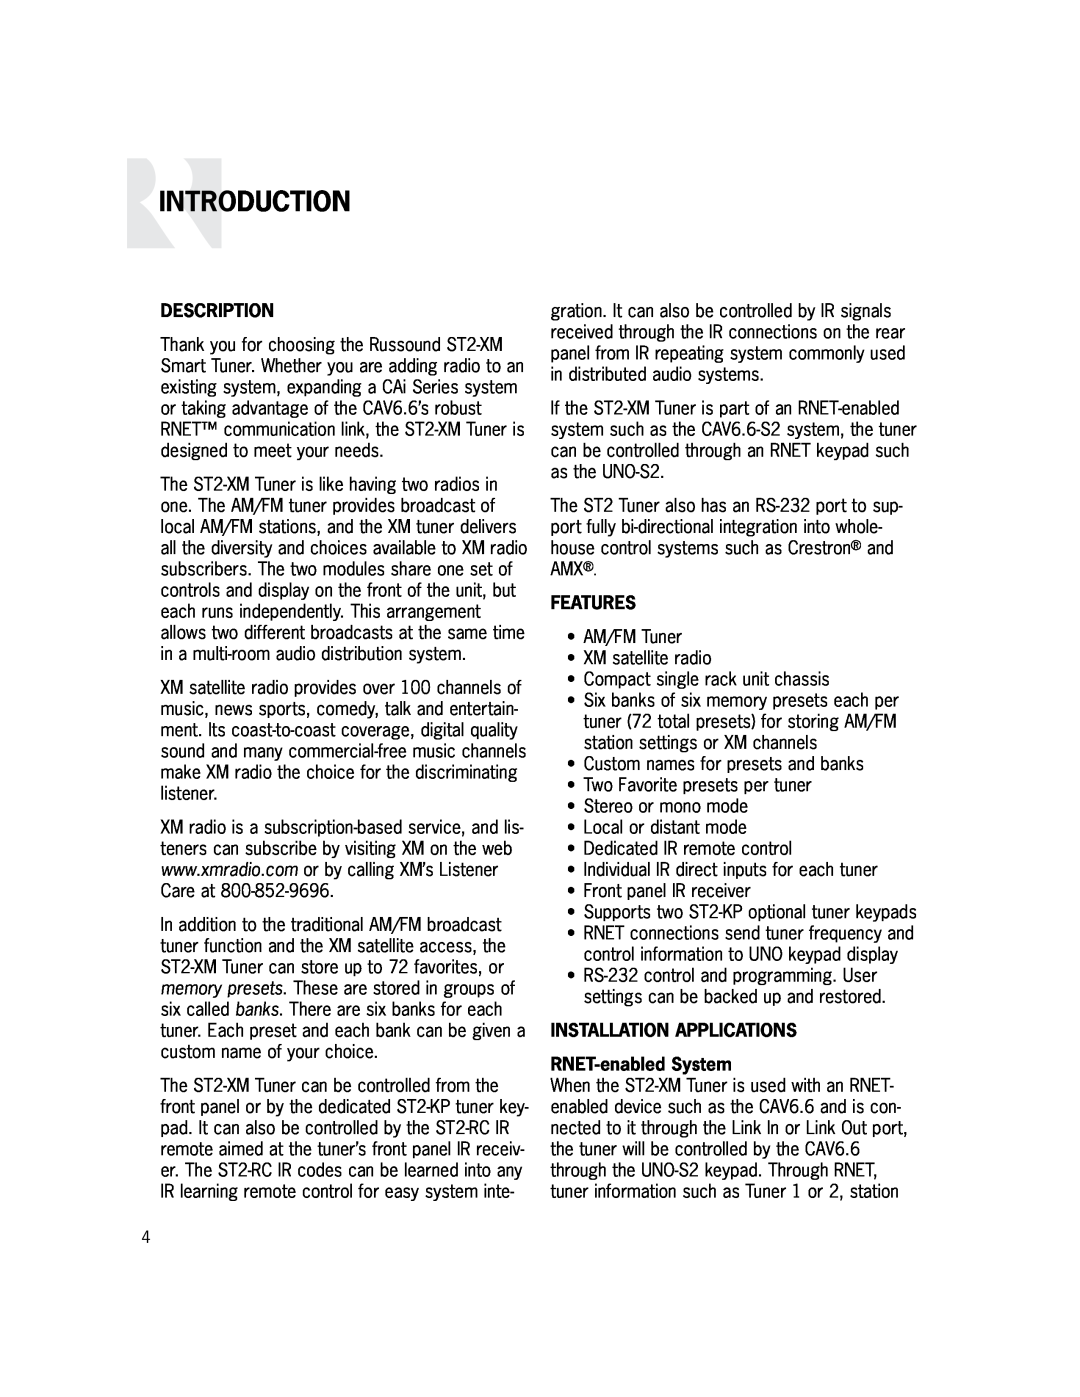 Russound ST2-XM manual Introduction, Description, Features, INSTALLATION APPLICATIONS RNET-enabledSystem 